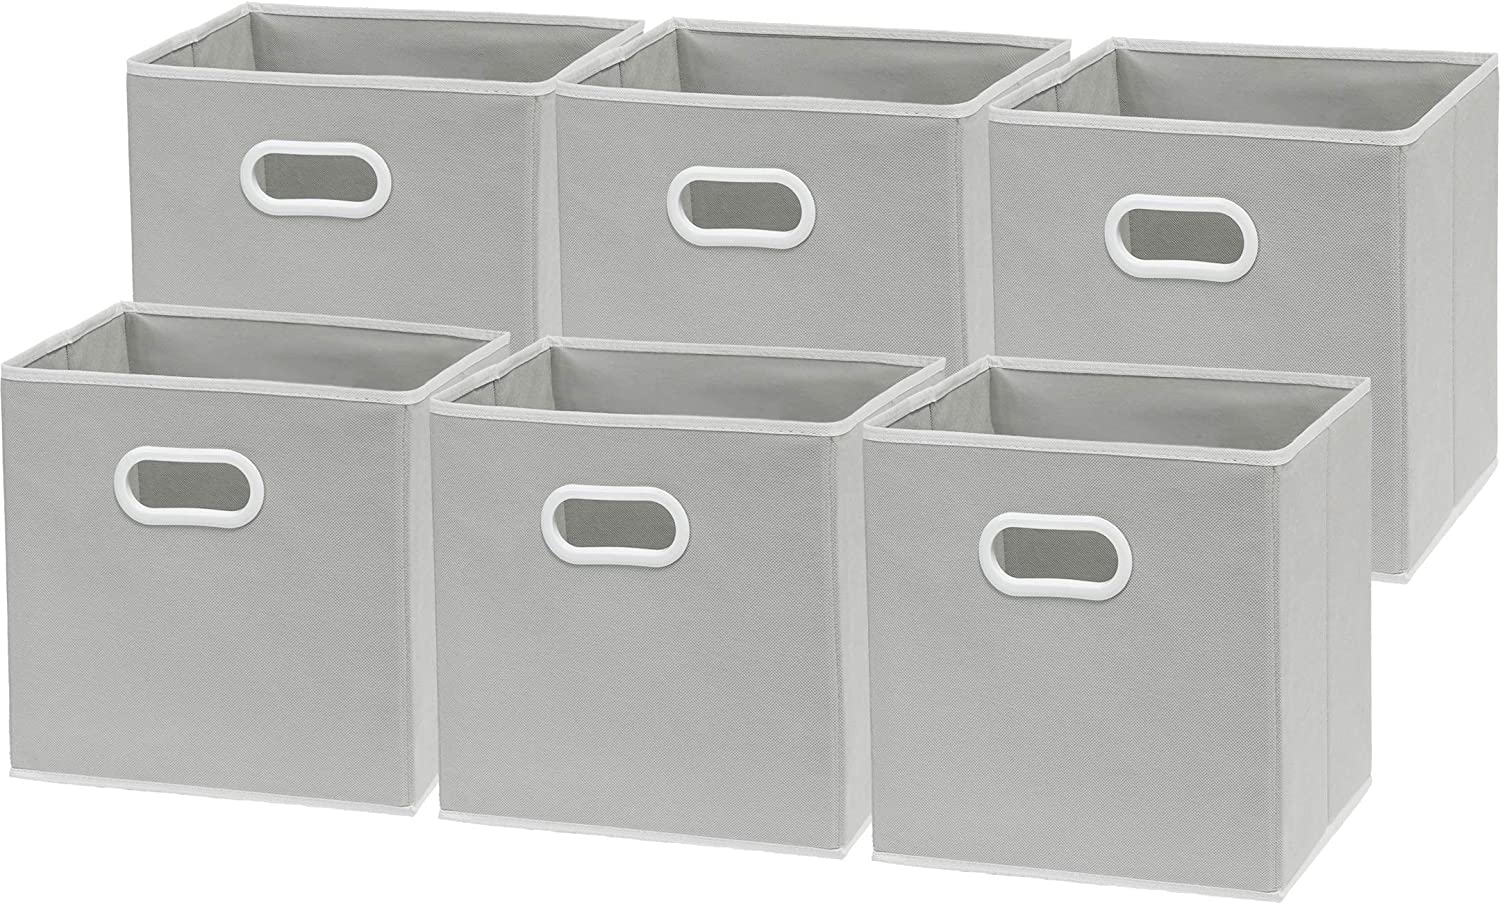 SimpleHouseware Collapsible Cube Storage Bins, 6-Pack